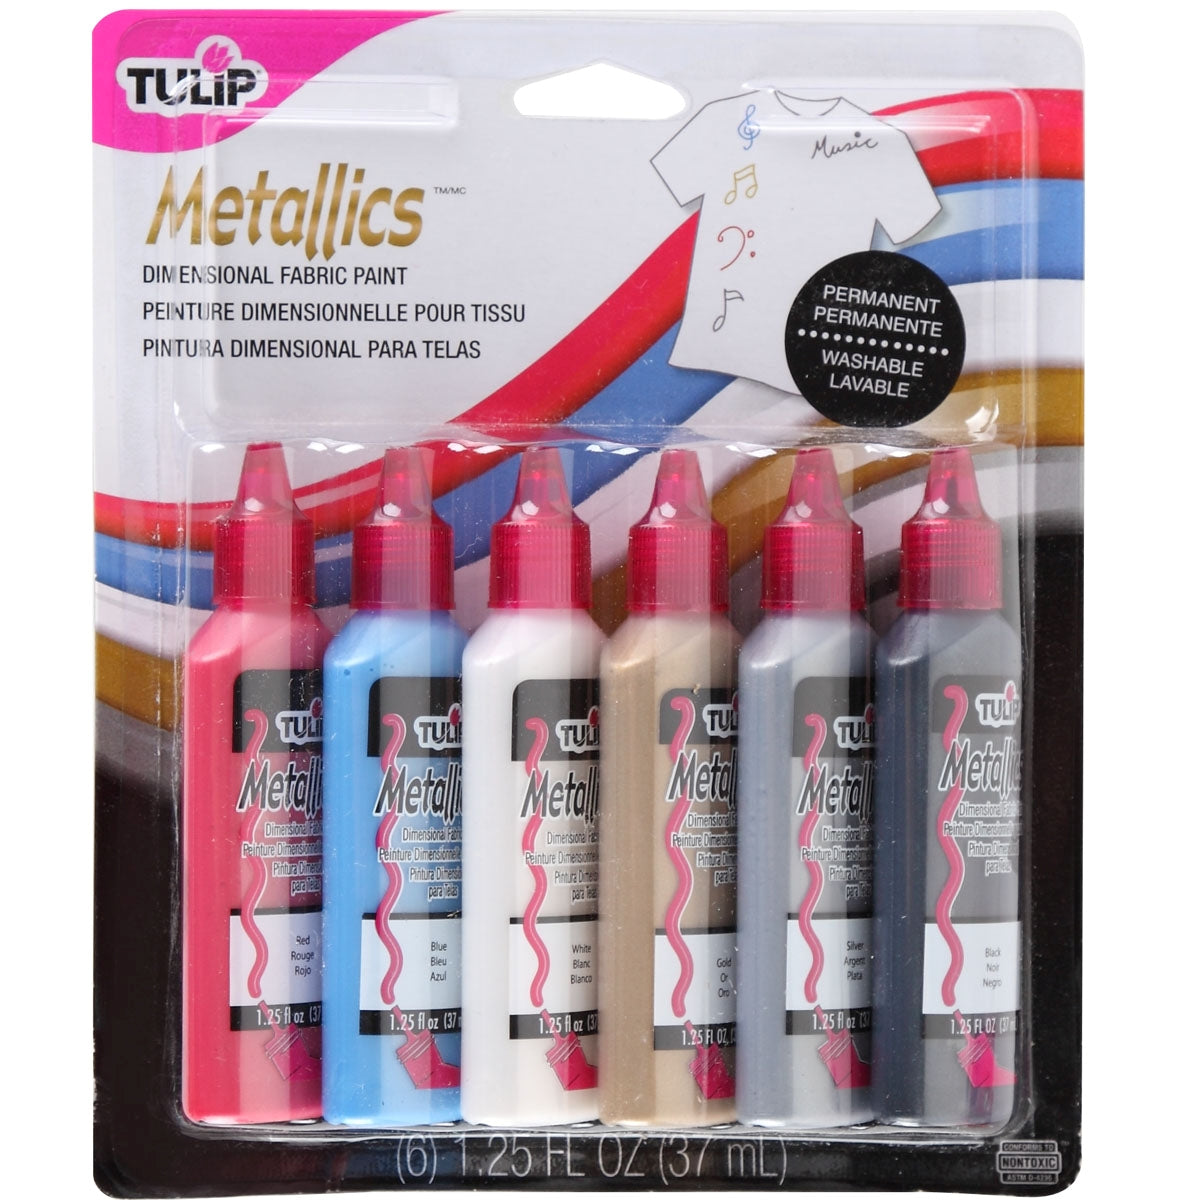 Tulip® Metallics™ Dimensional Fabric Paint